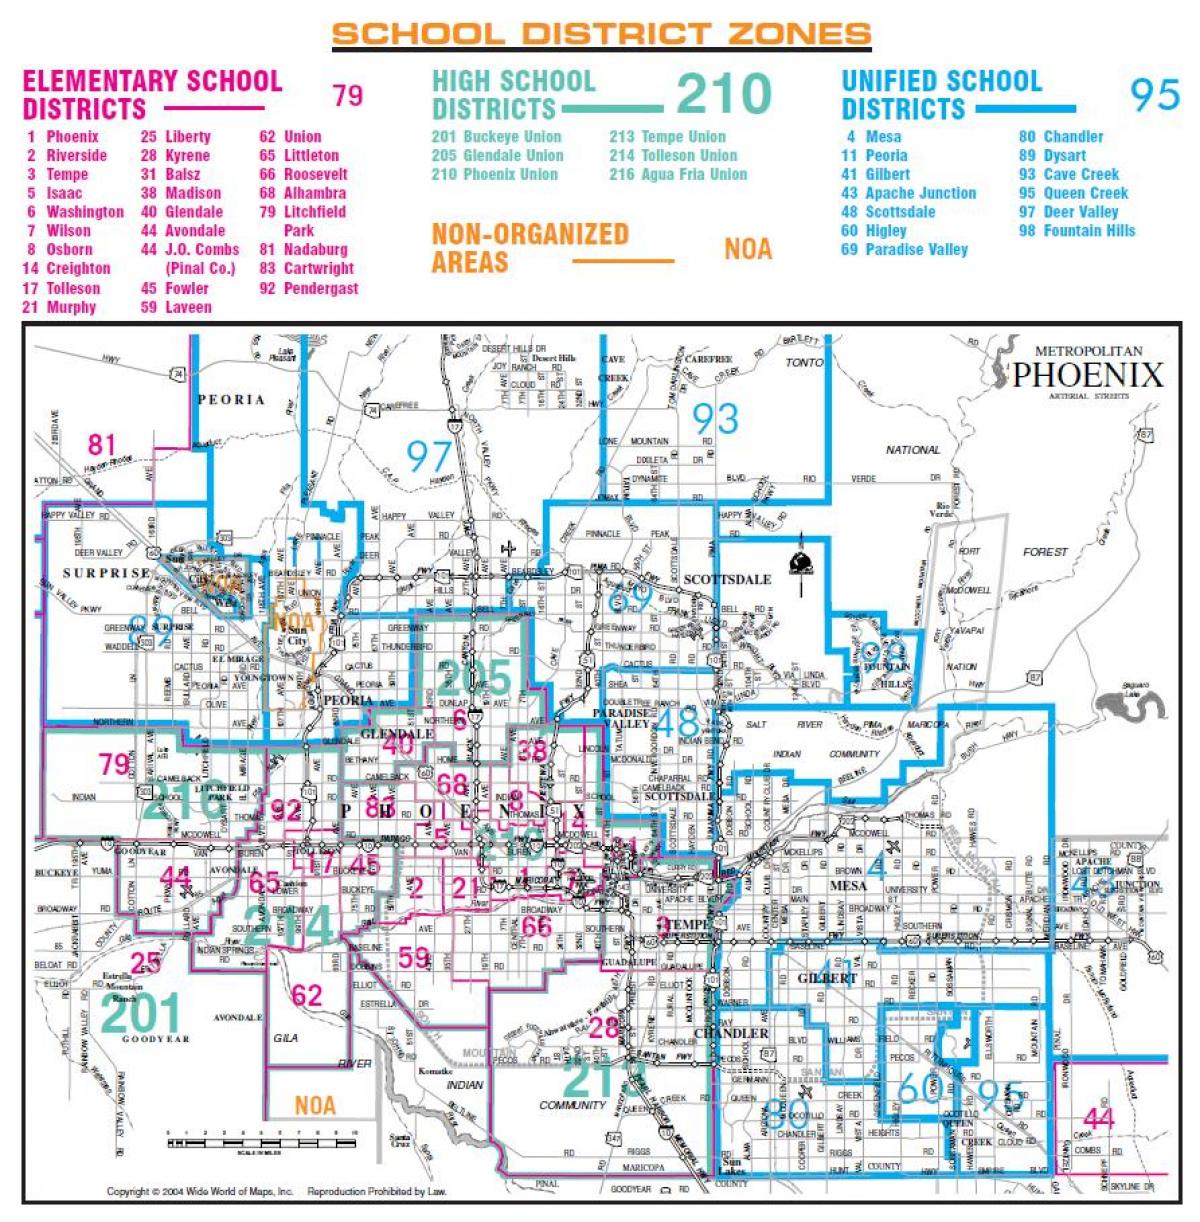 Phoenix union high school district carte